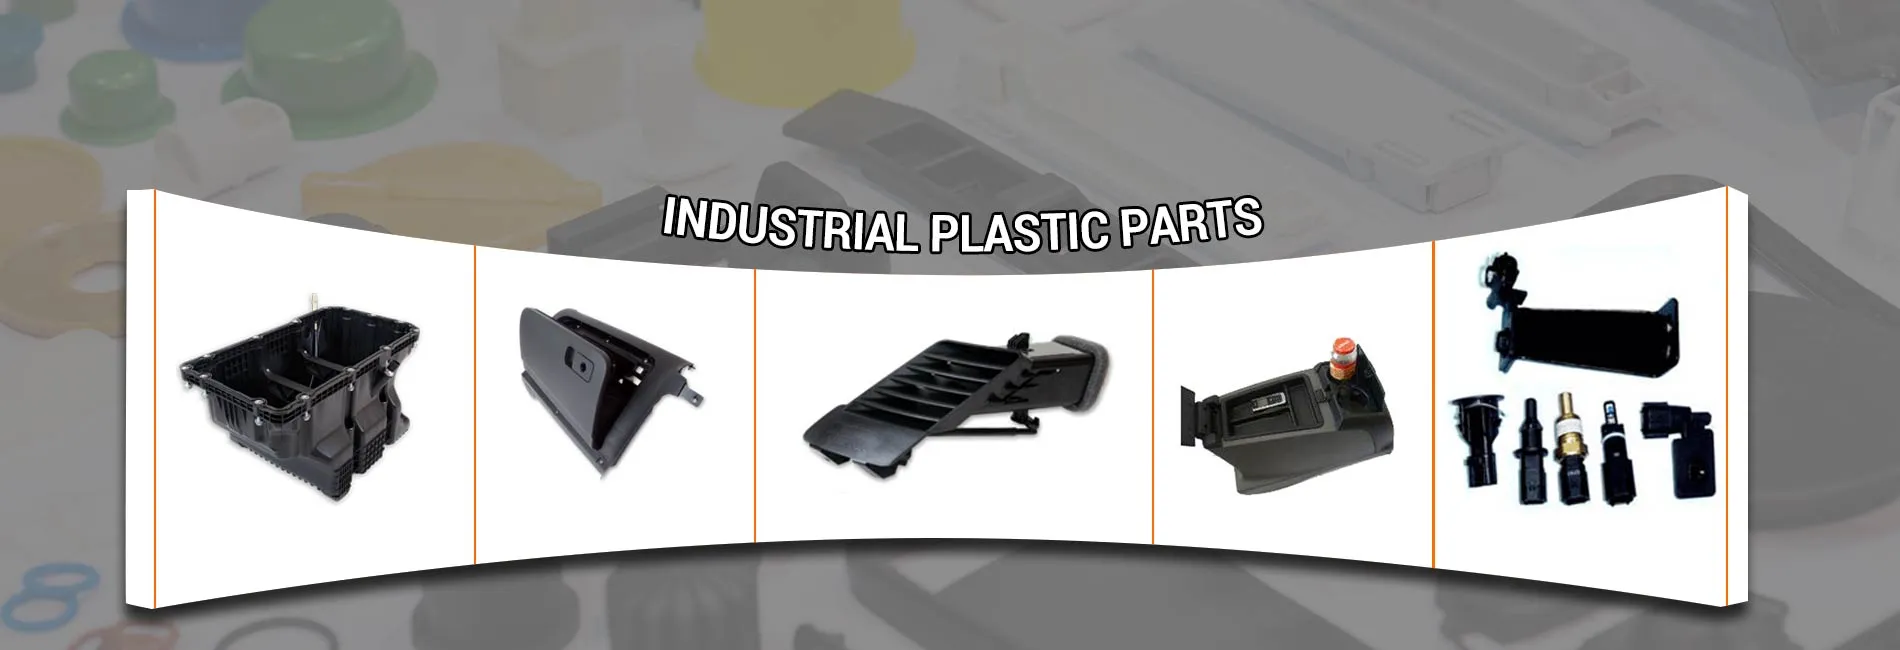 industrial plastic parts in india, plastic parts in ahmedabad